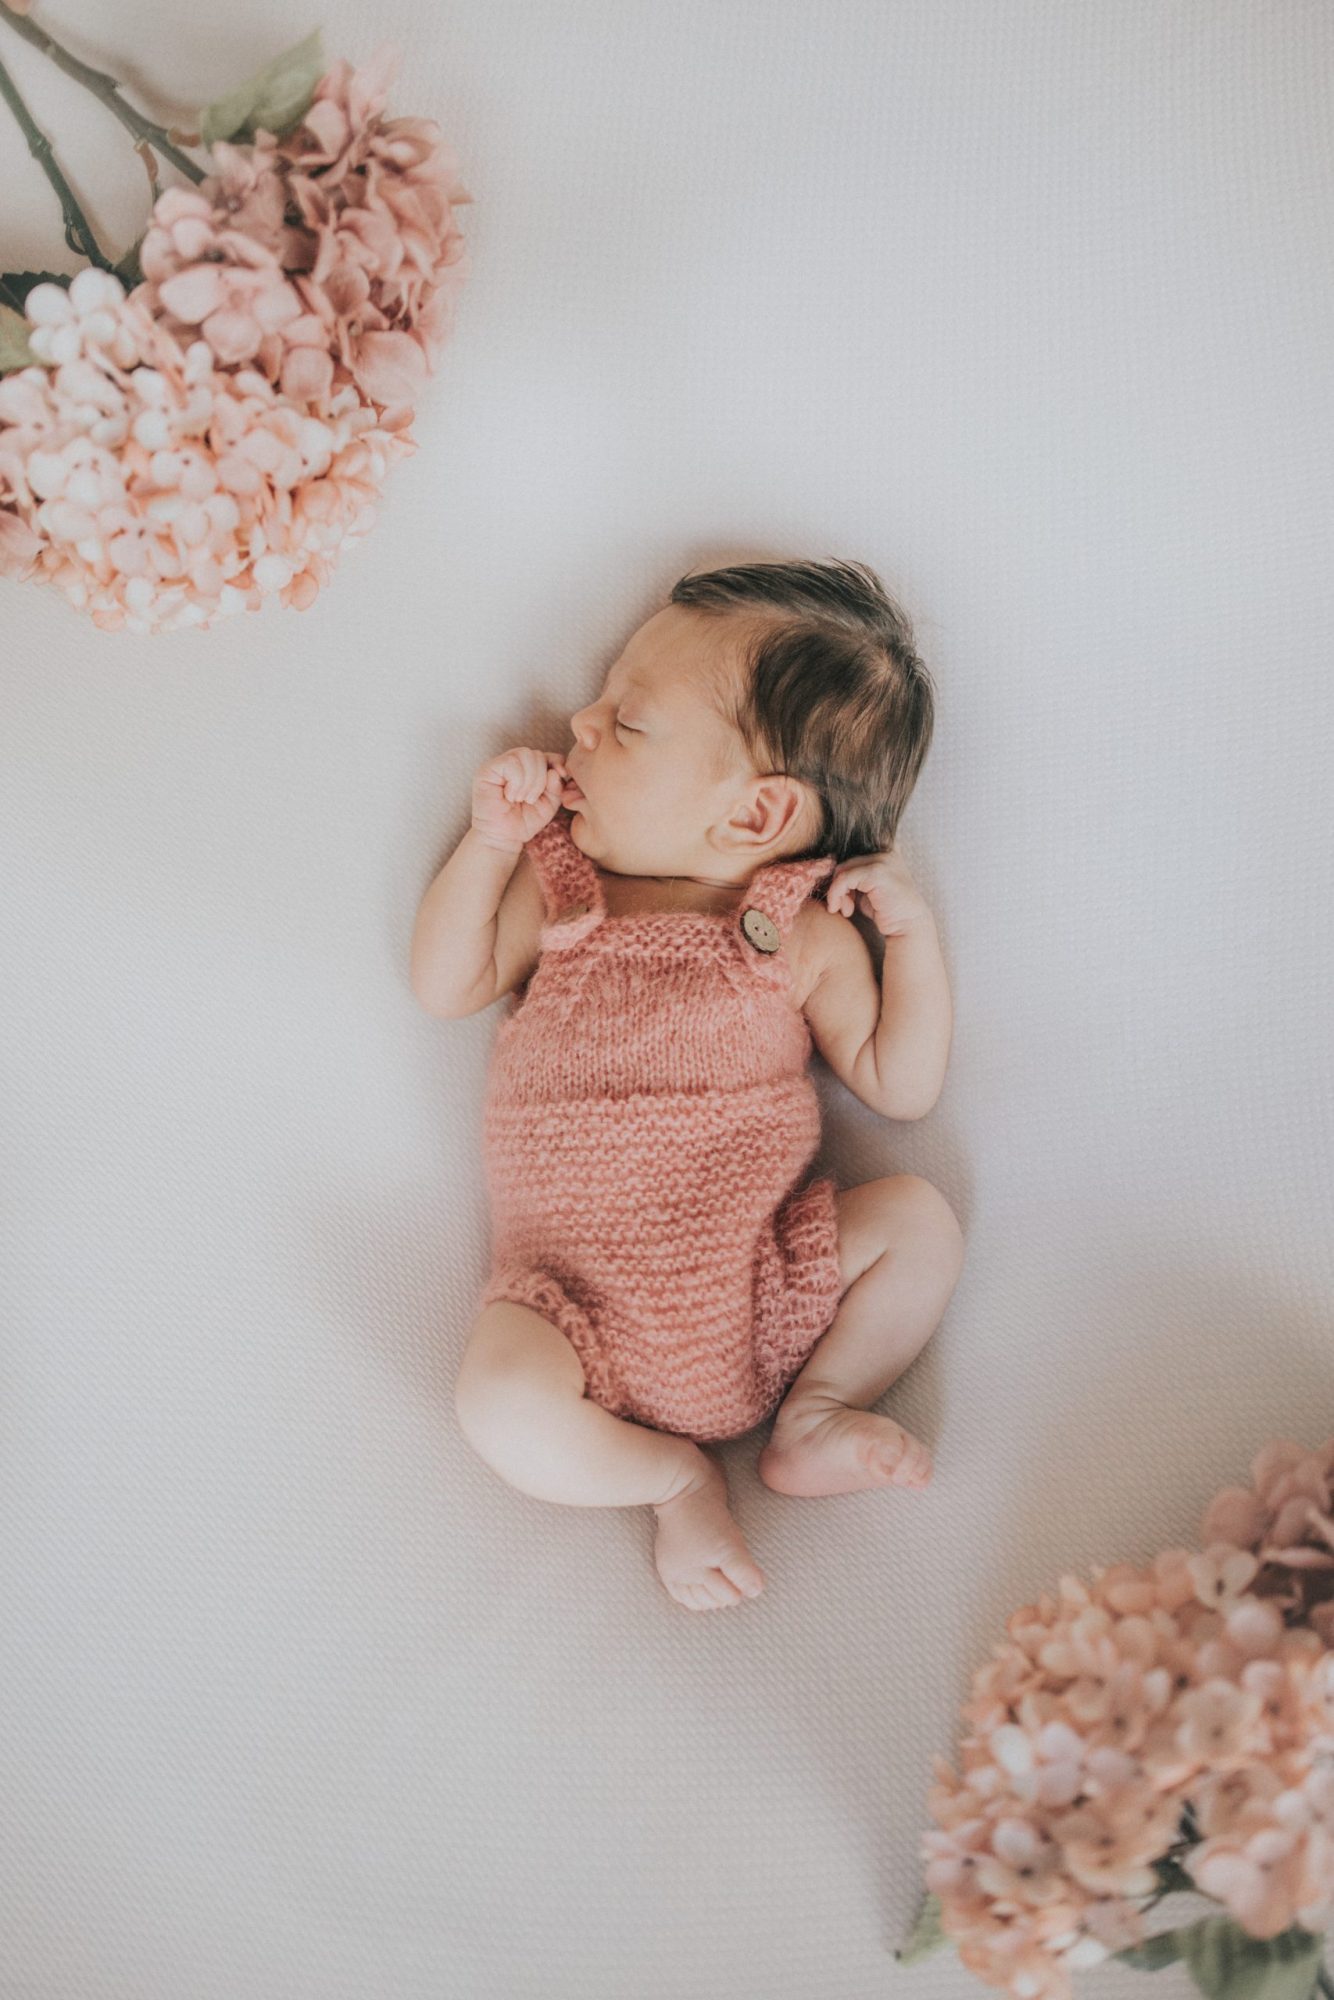 Bebé acostado sobre sábana blanca con flores rosadas